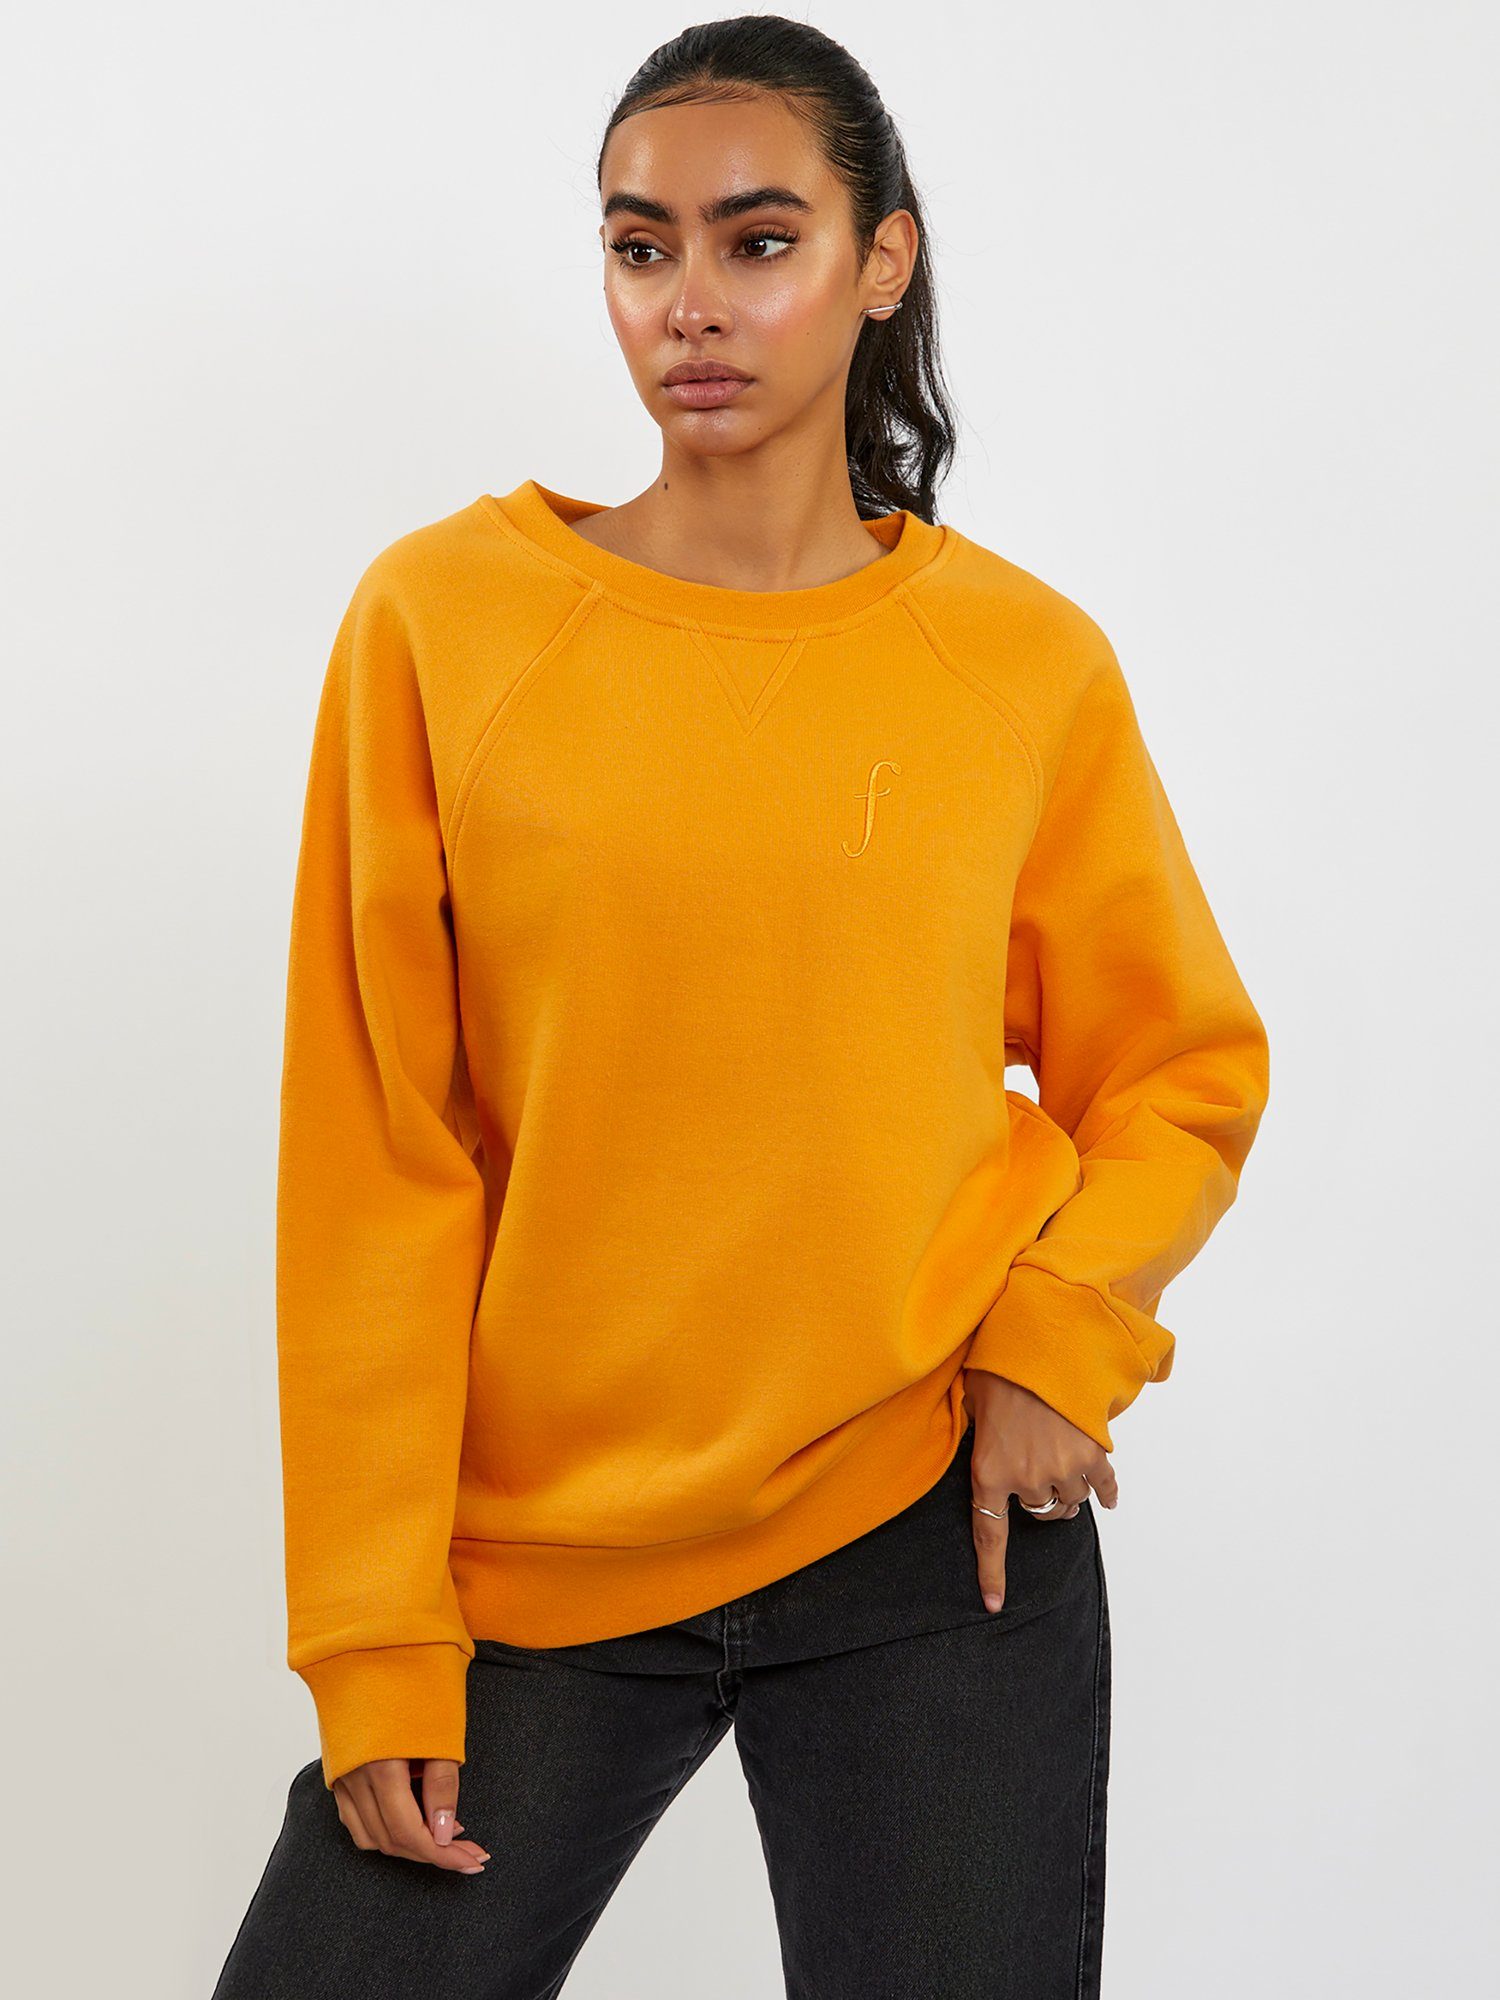 Freshlions Kurzweste Freshlions Sweatshirt orange Embroidery F